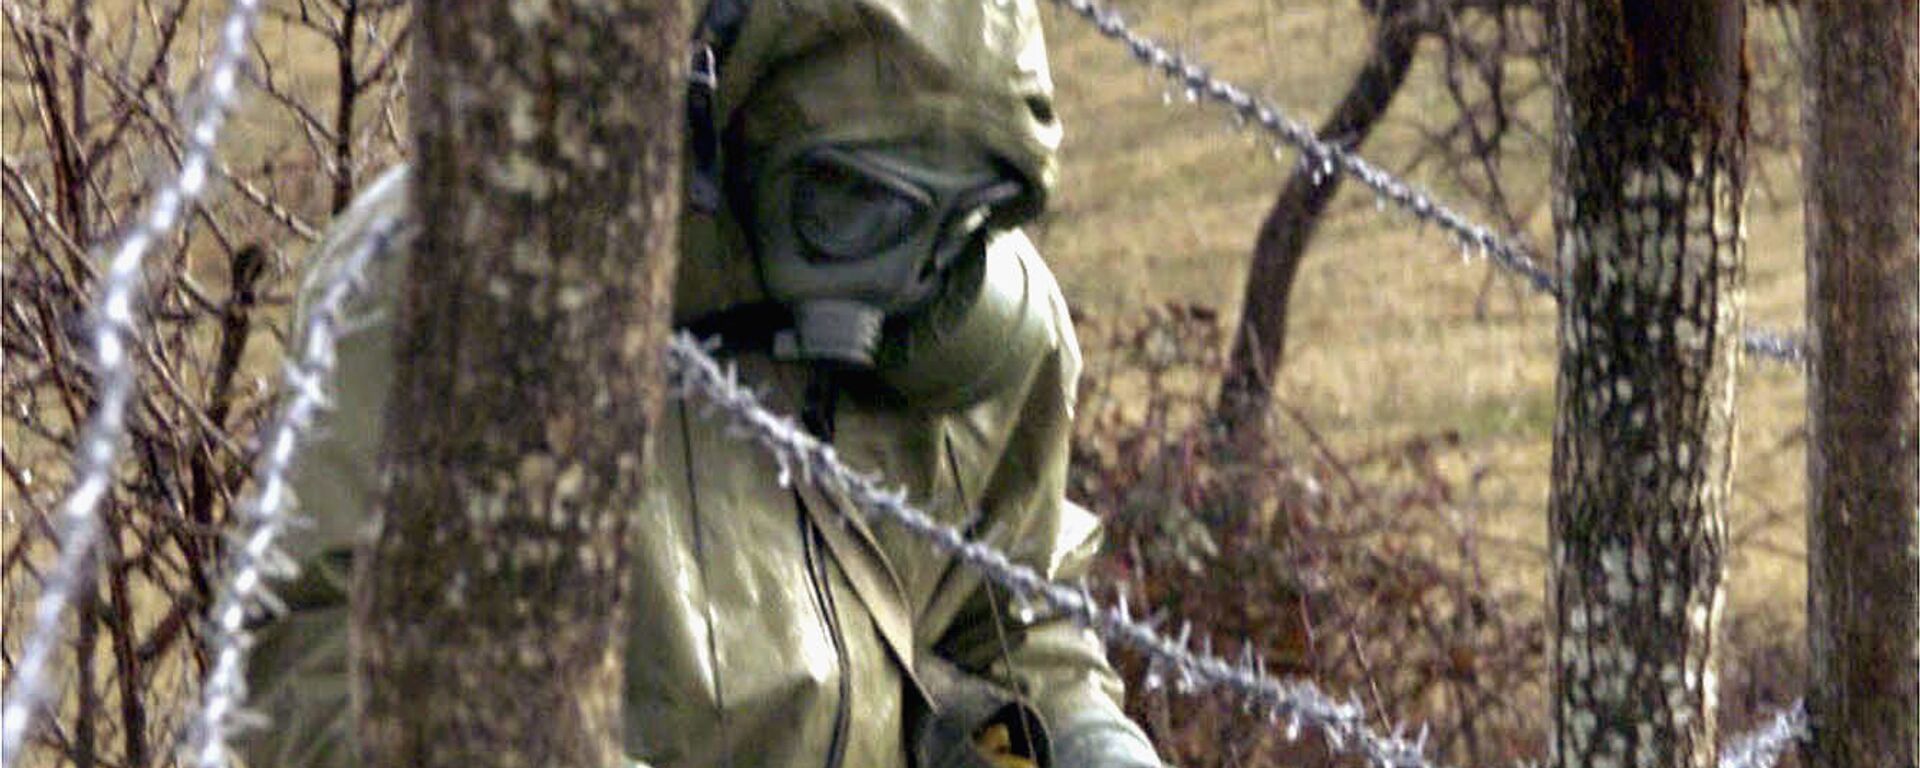 Vojnik meri radioaktivnost u zoni bombardovanja, Preševo, Srbija - Sputnik Srbija, 1920, 23.03.2023